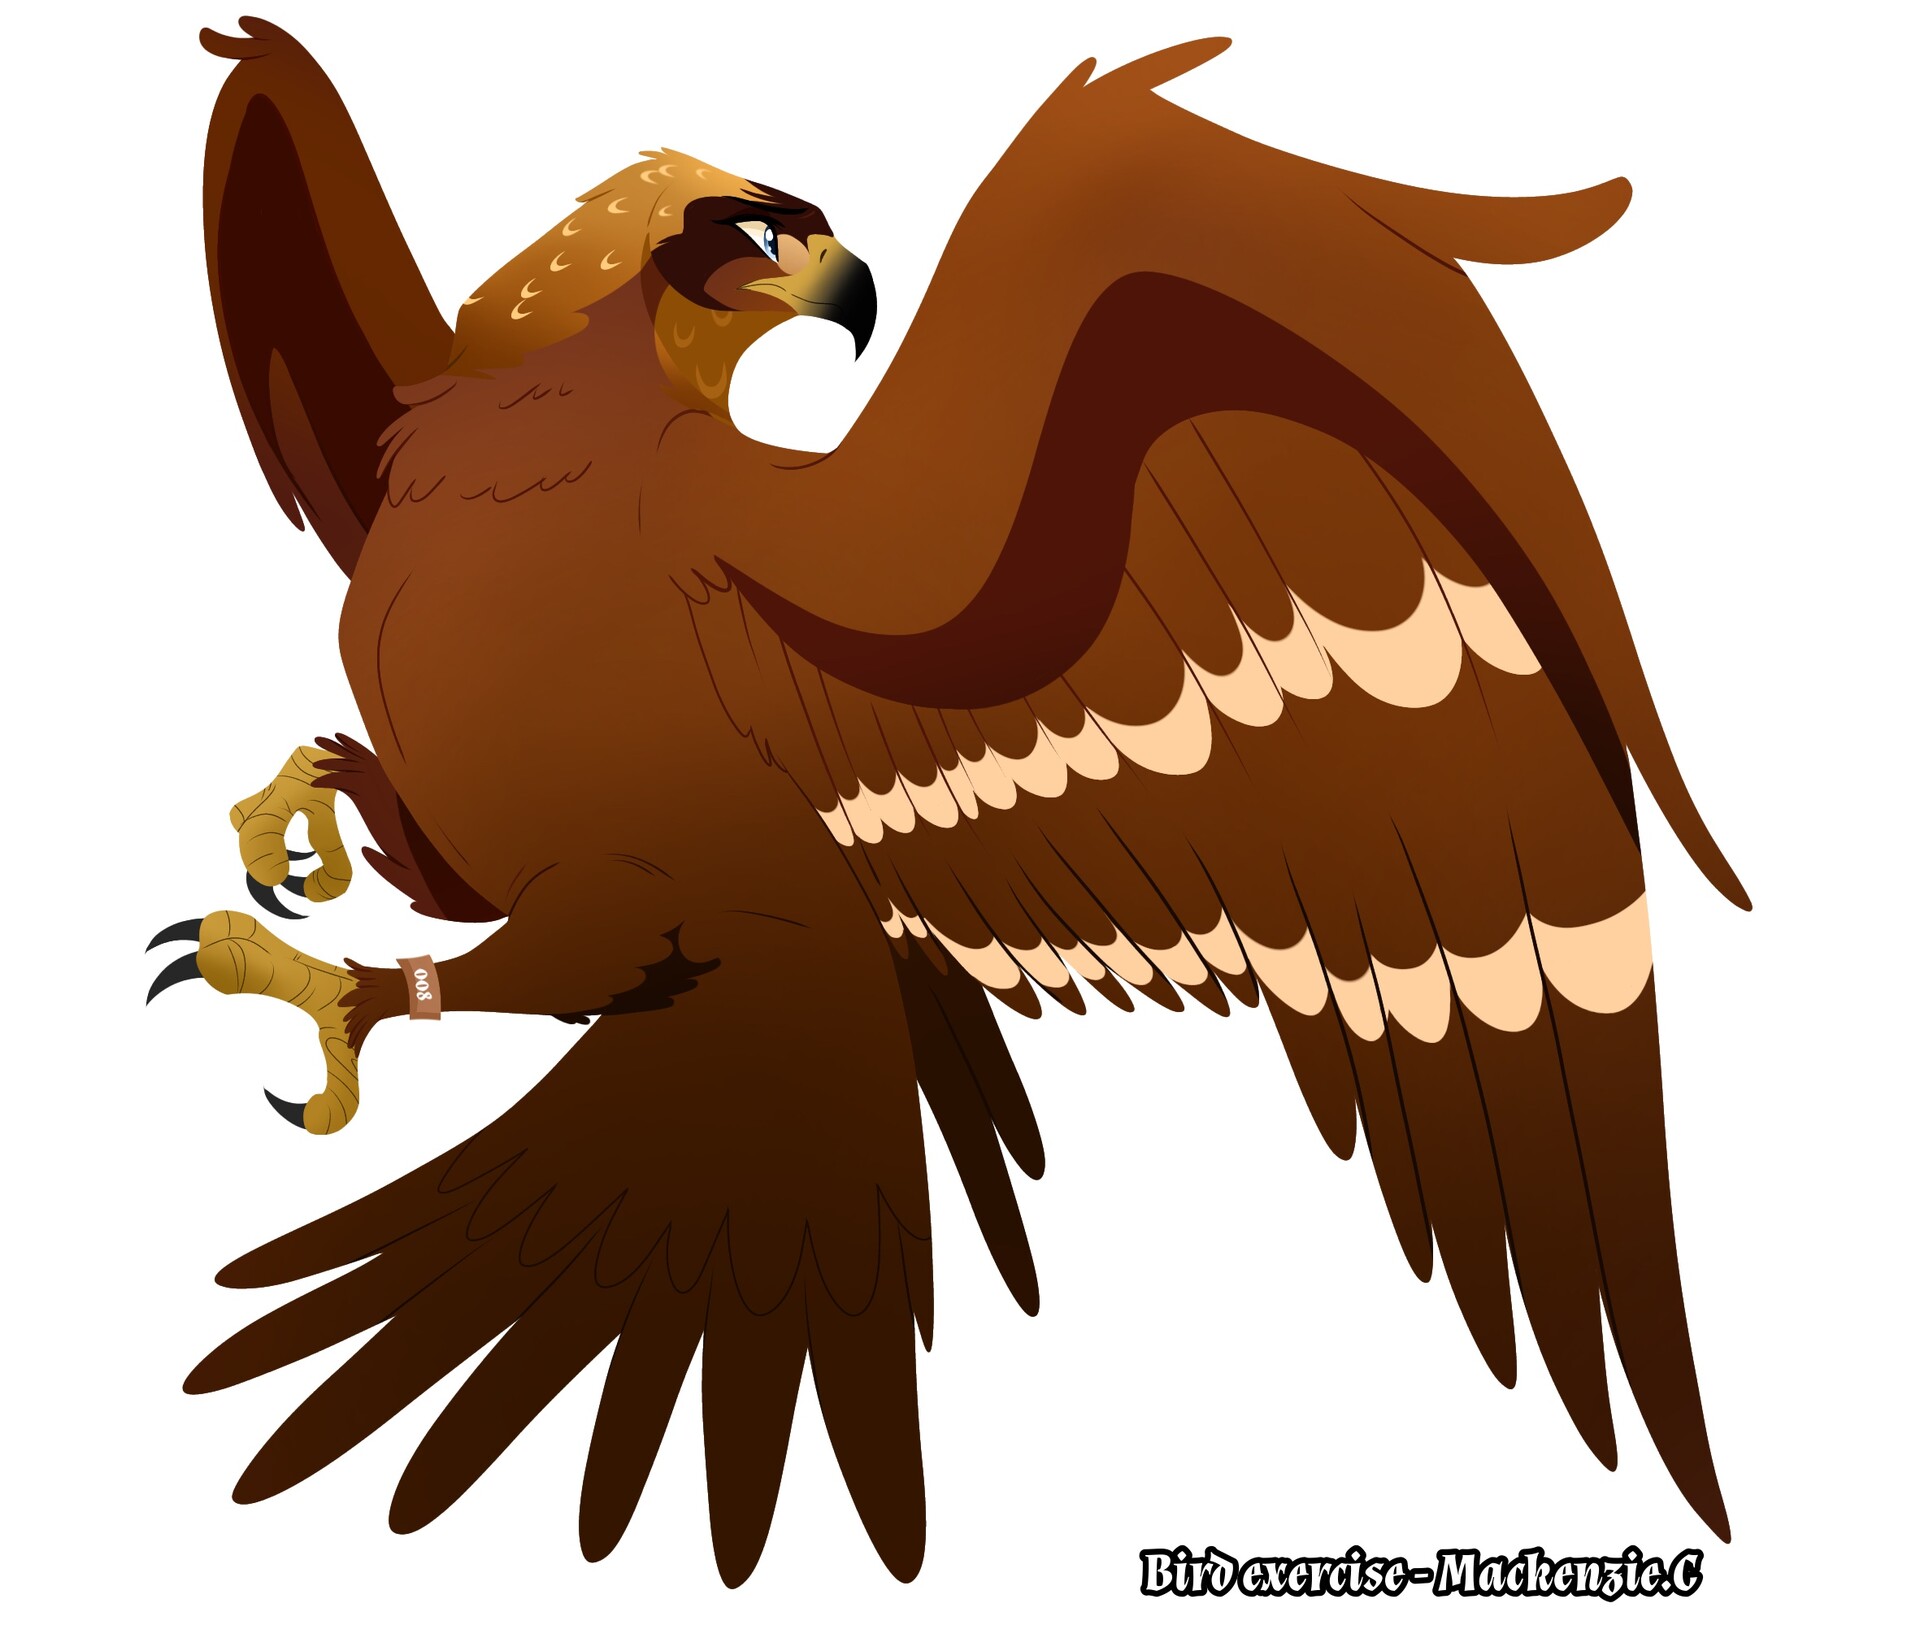 ArtStation - Bird illustration-Golden Eagle